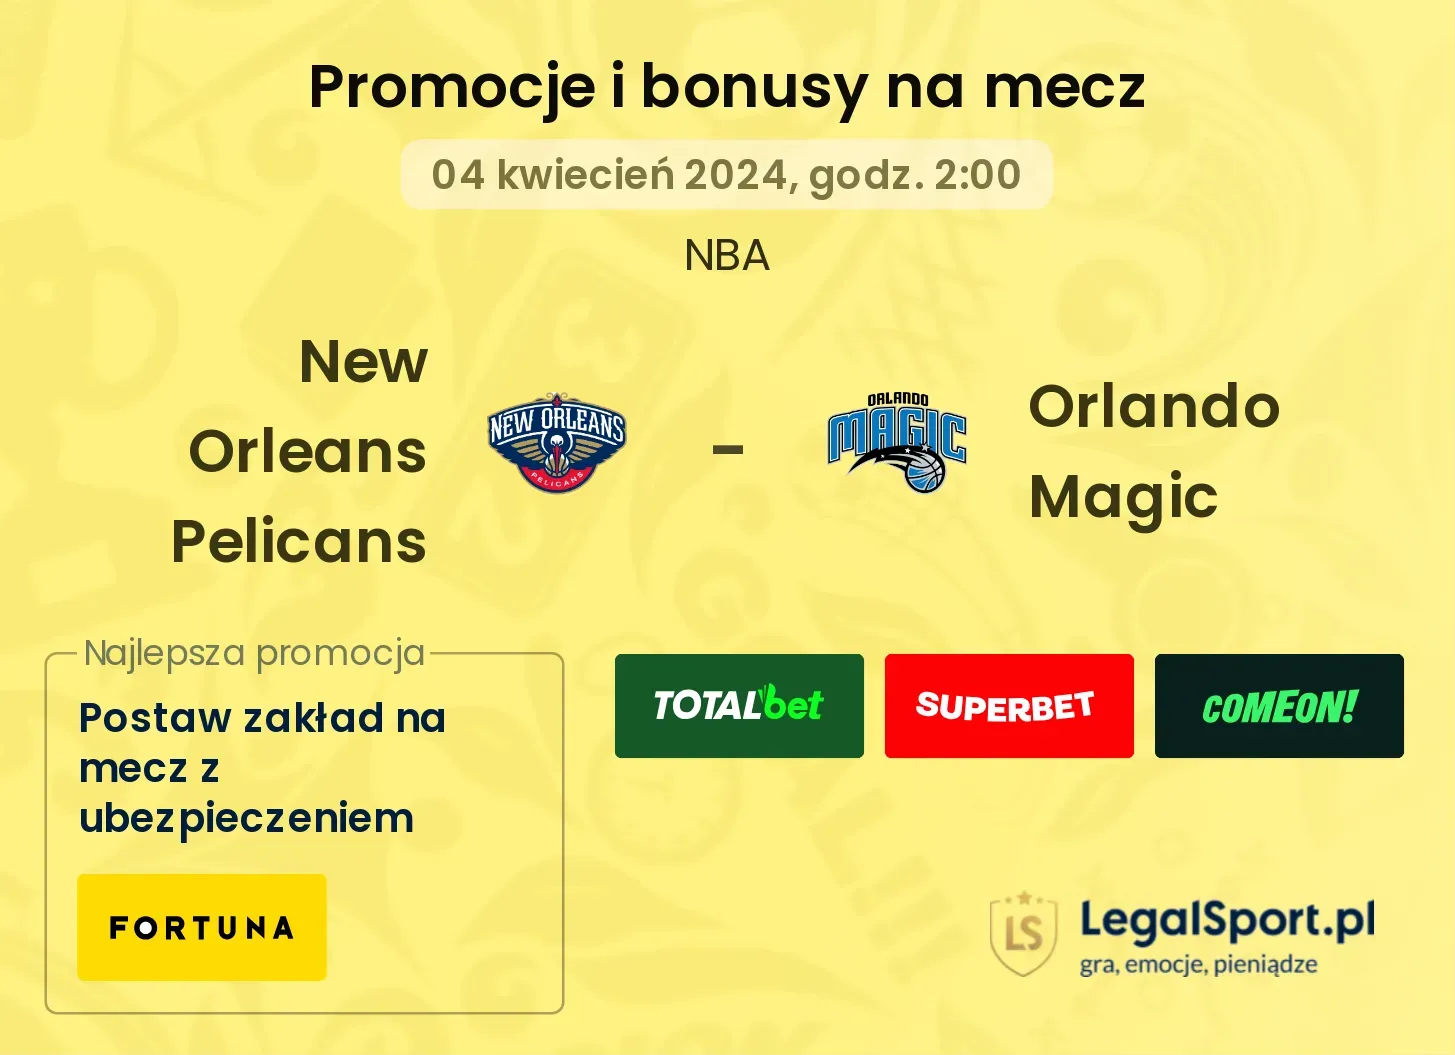 New Orleans Pelicans - Orlando Magic promocje bonusy na mecz